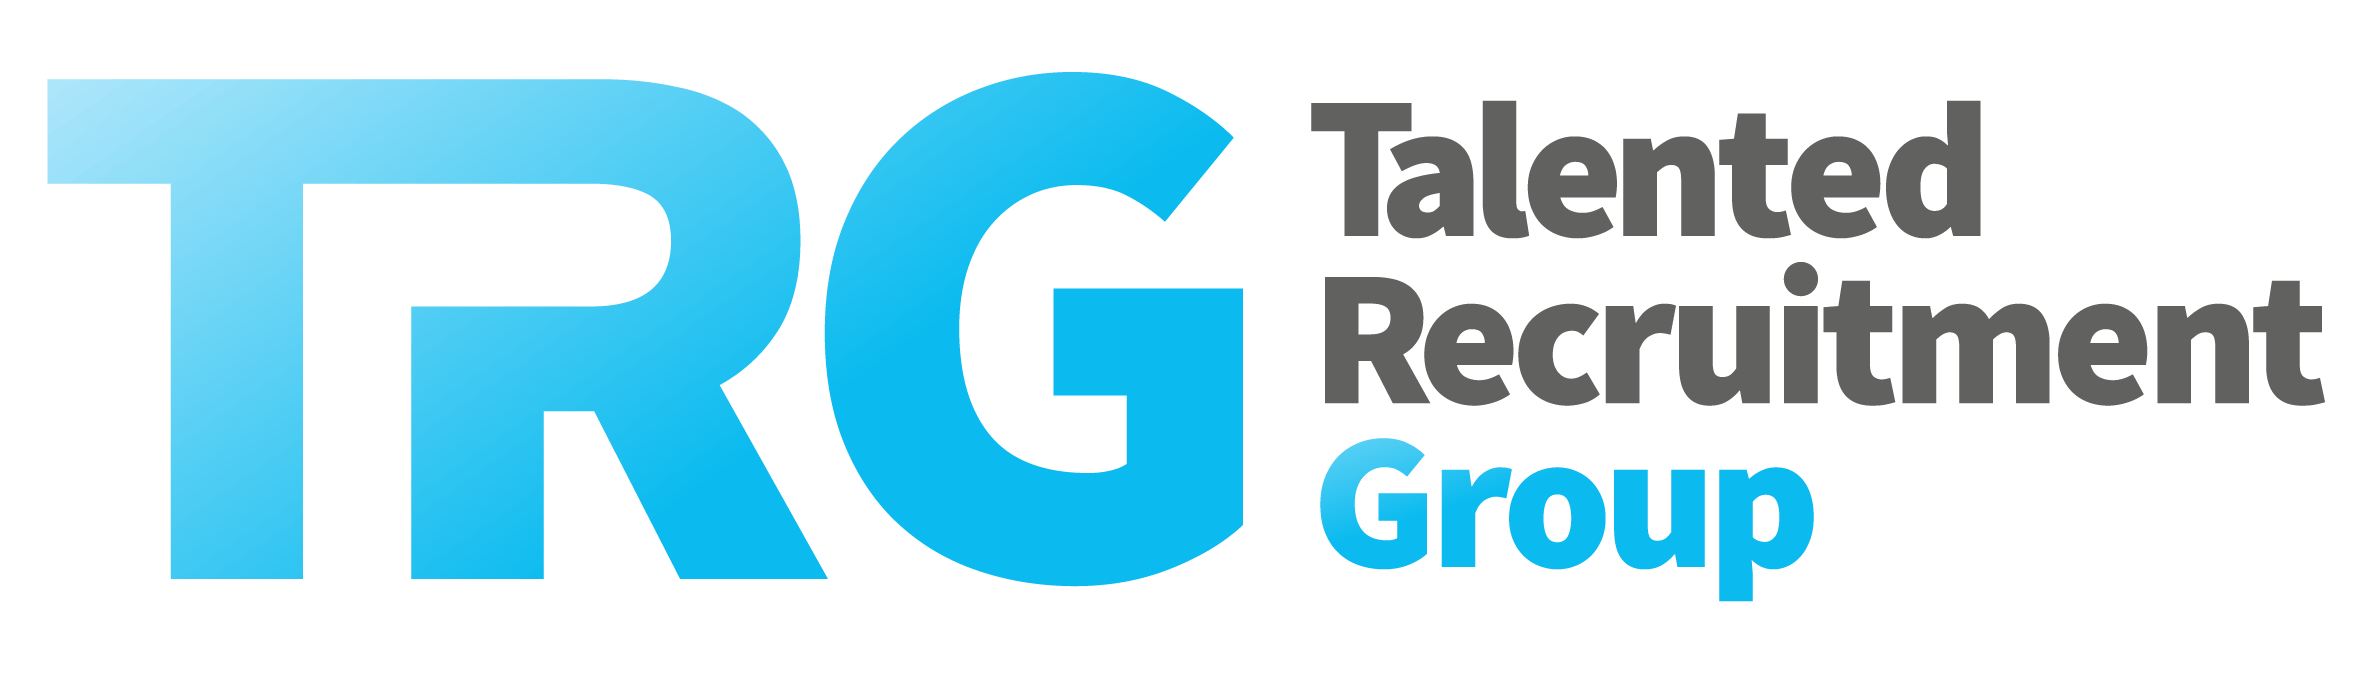 Talented Recruitment Group Logo